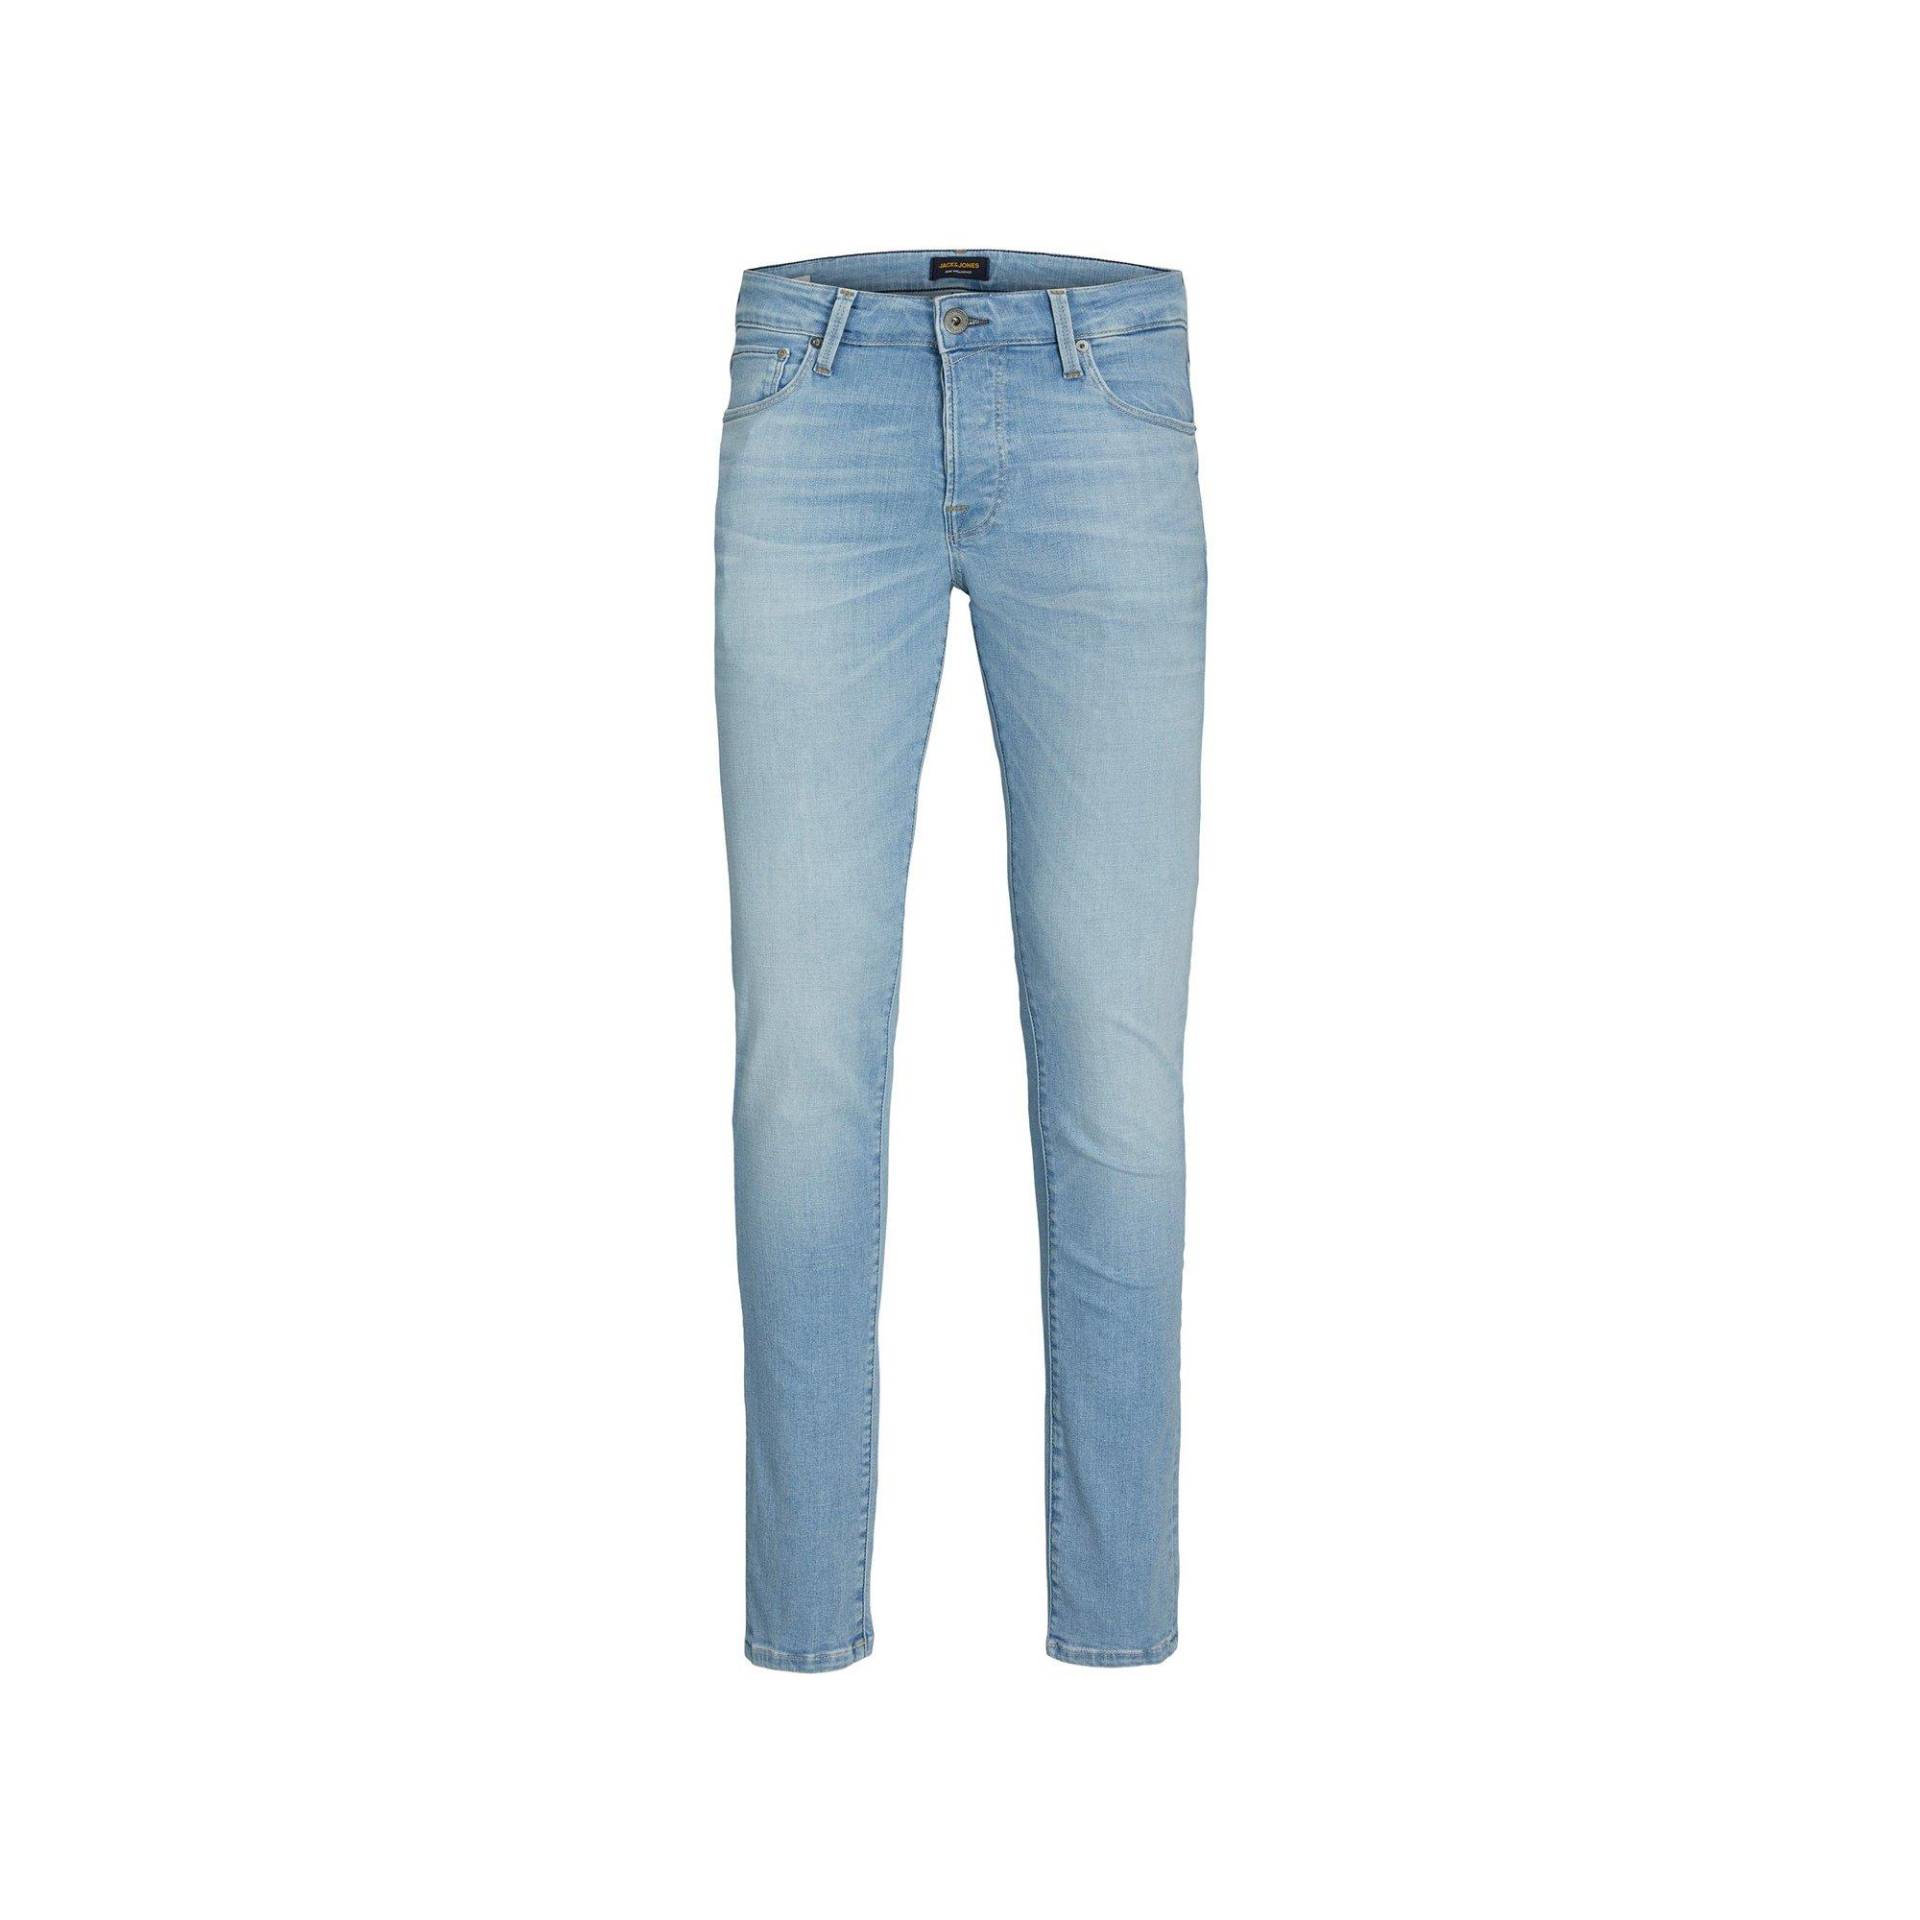 Jeans, Slim Fit Herren Blau Denim L32/W32 von JACK & JONES